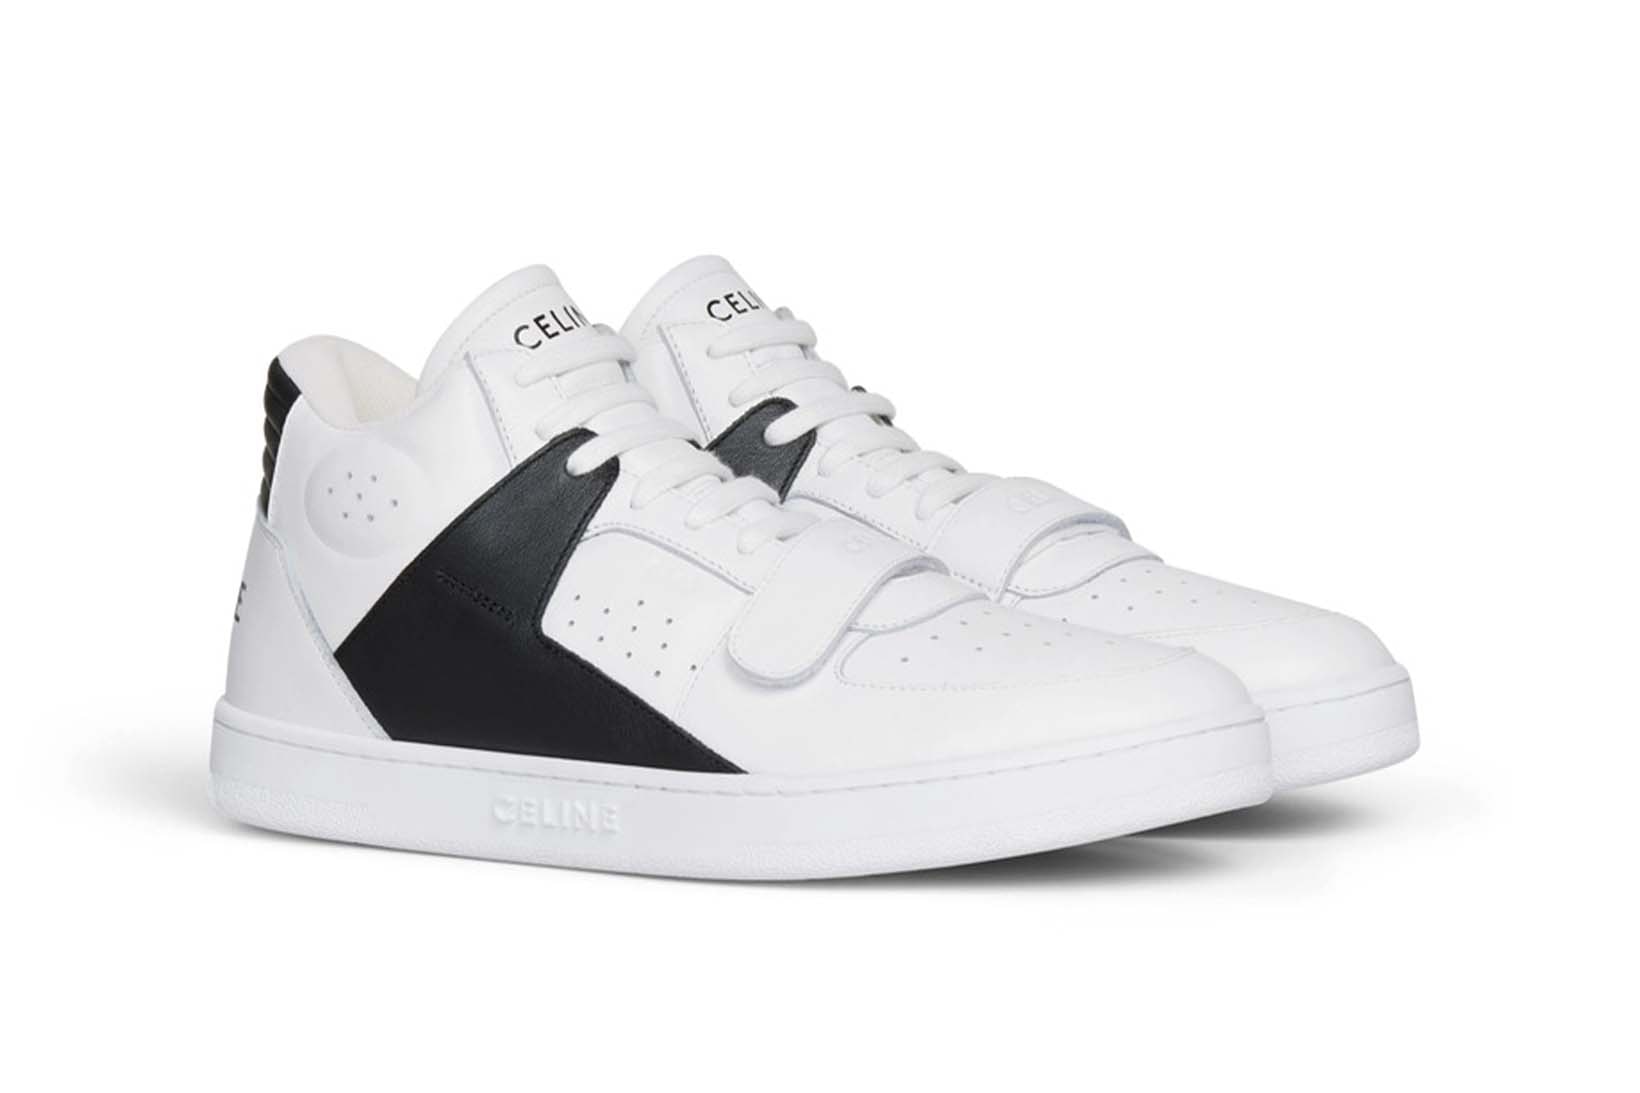 Celine CT-02 Mid Sneaker White Black Price Release Date